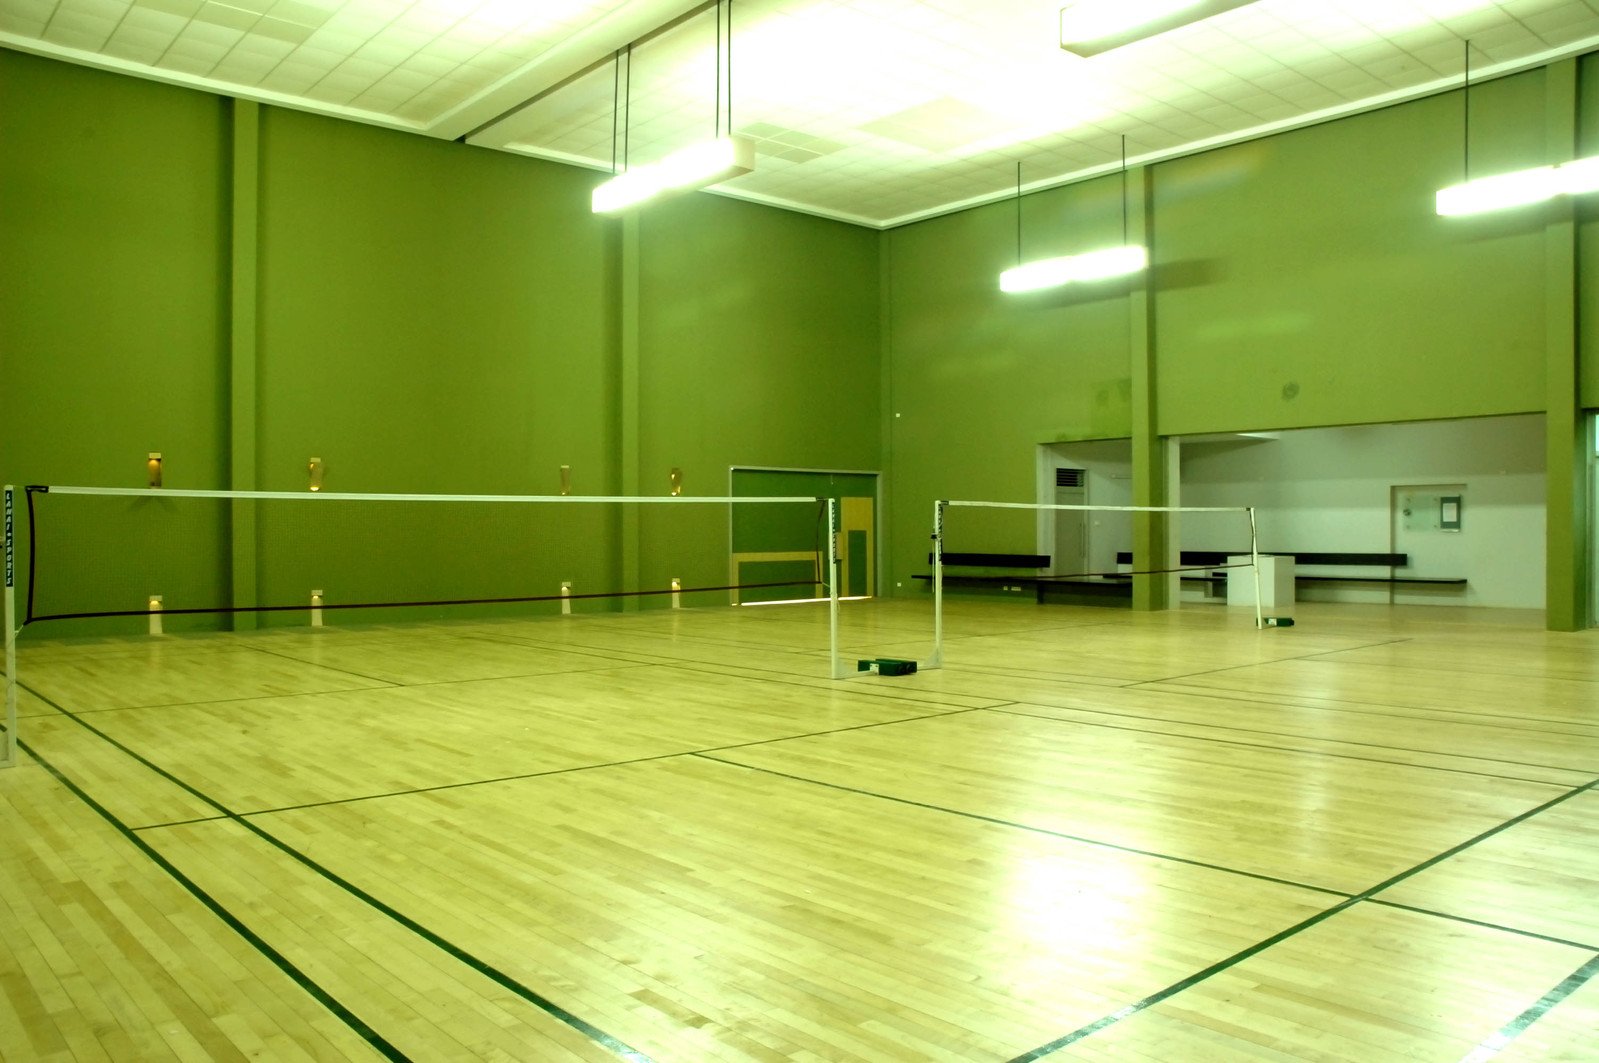 large empty indoor sports court with wooden floor